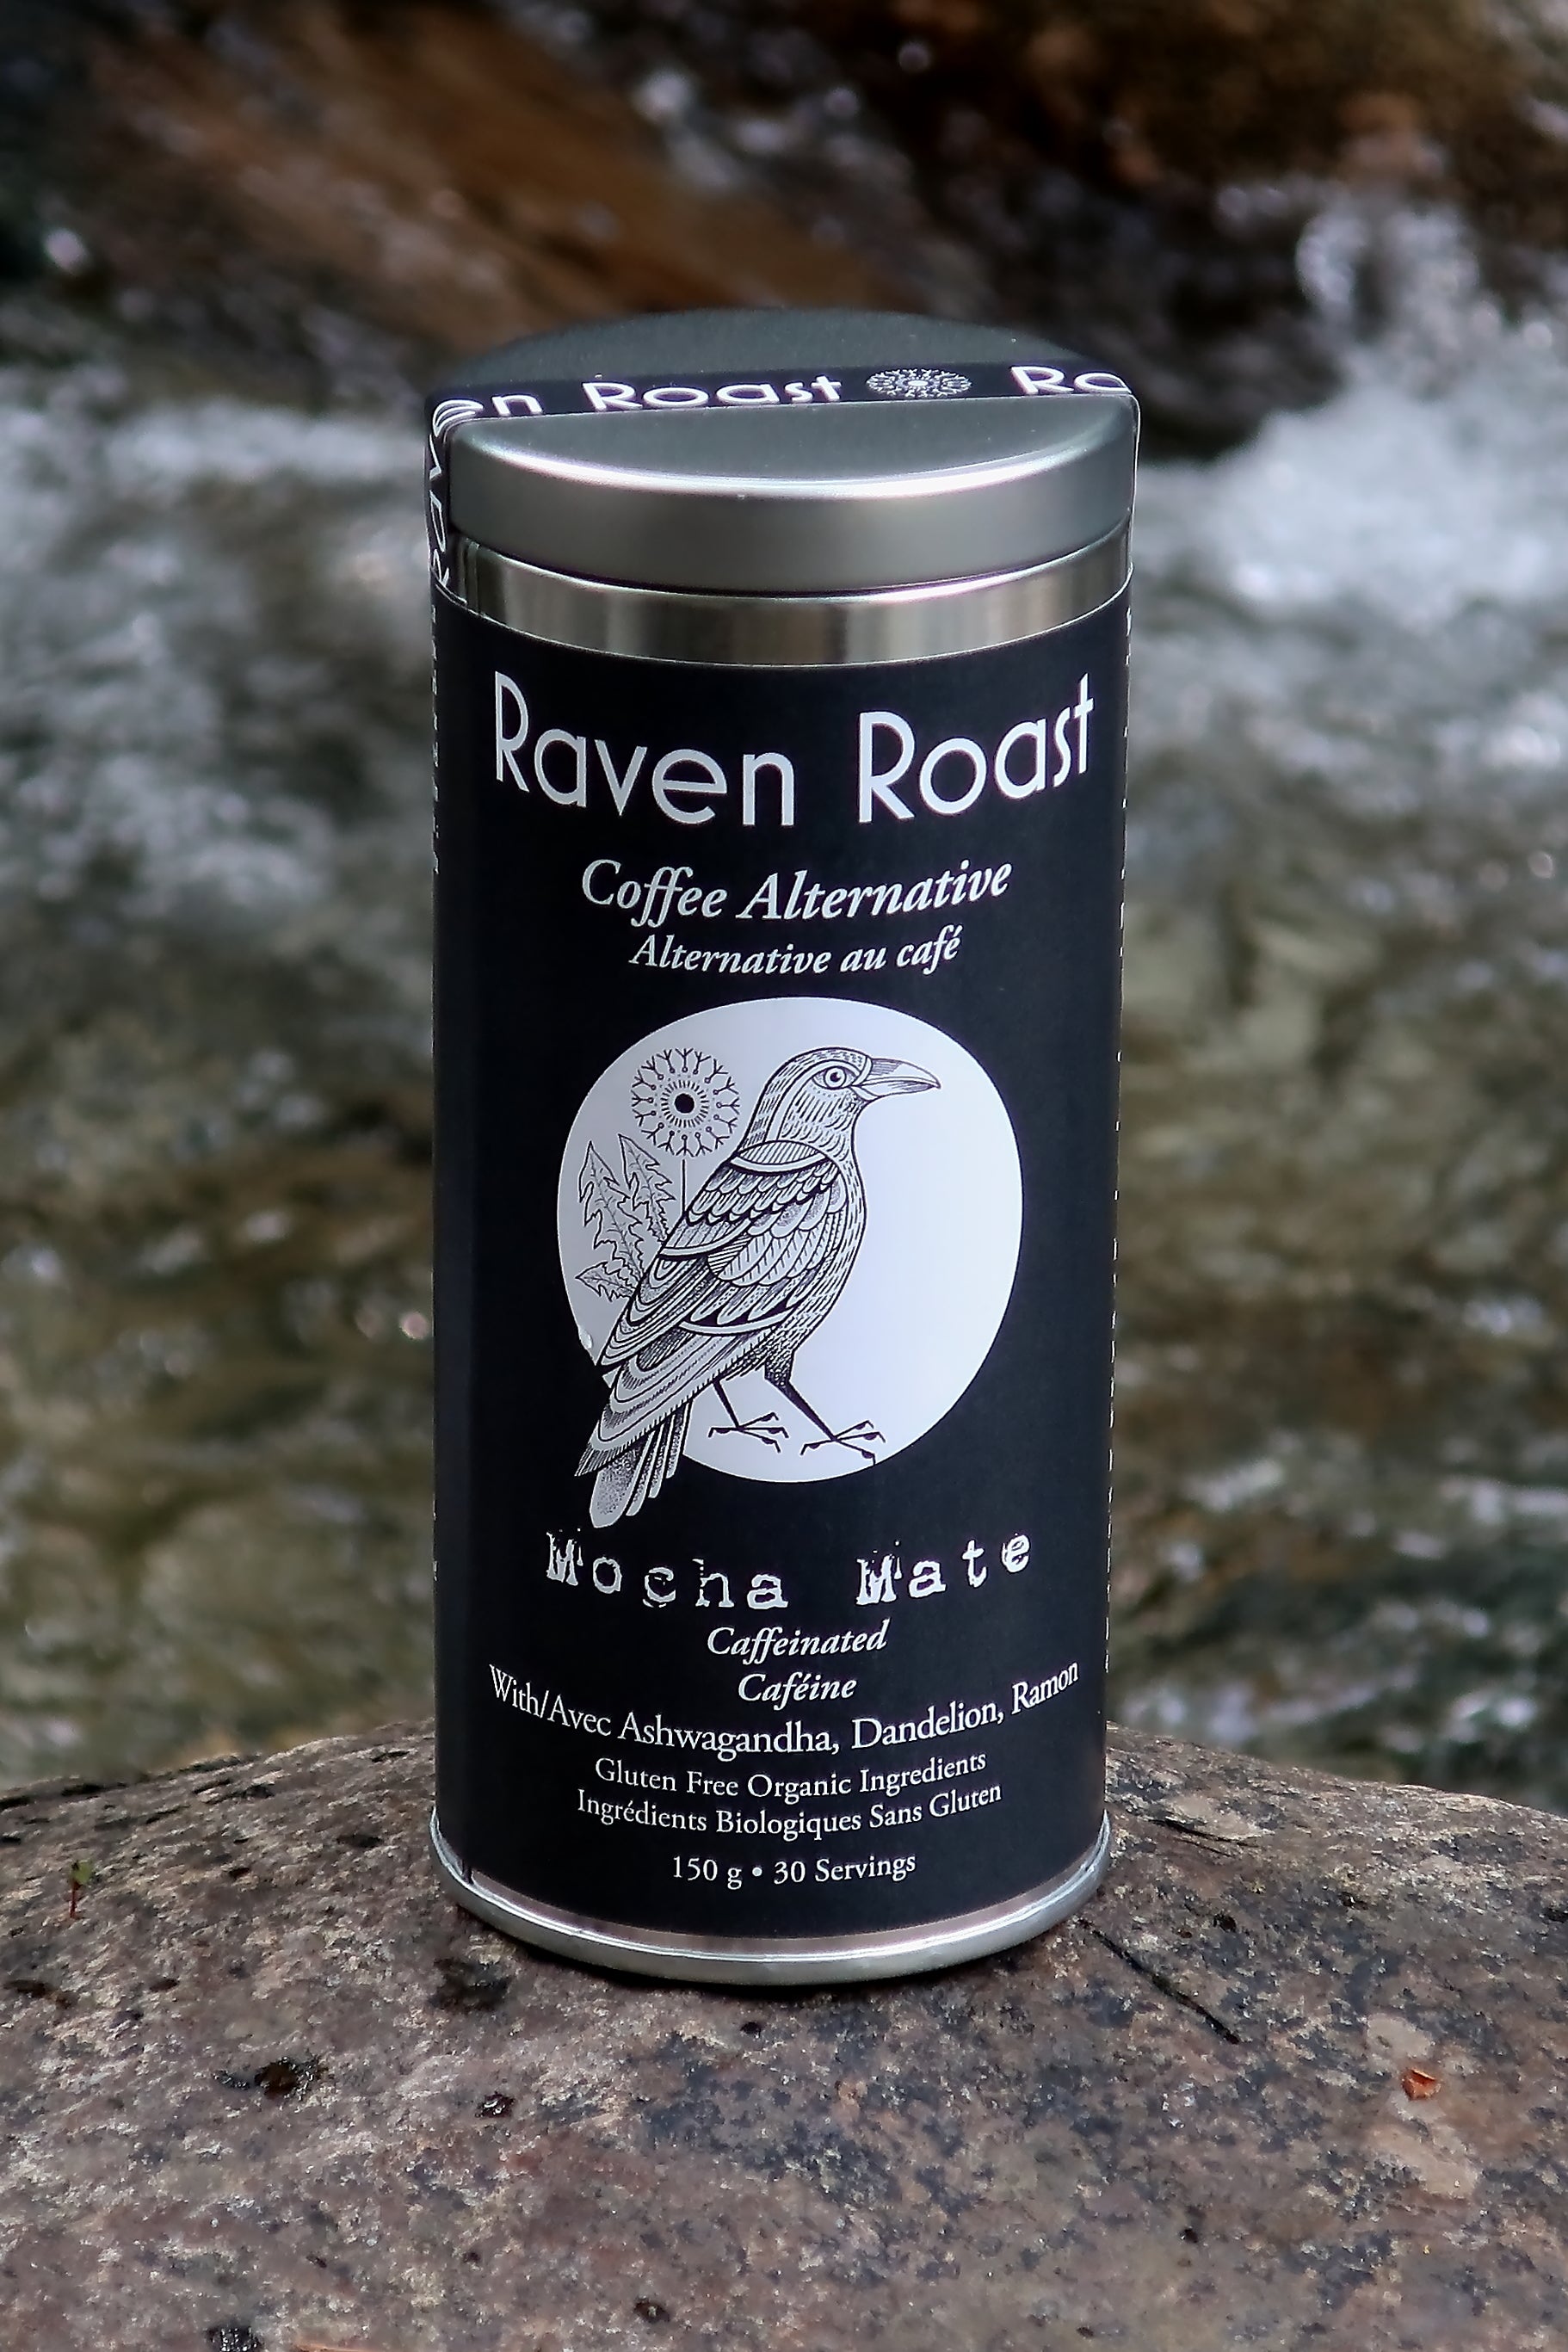 Raven Roast Mocha Mate (caffeinated) 150g Coffee Alternative - nelsonnaturals remineralizing toothpaste